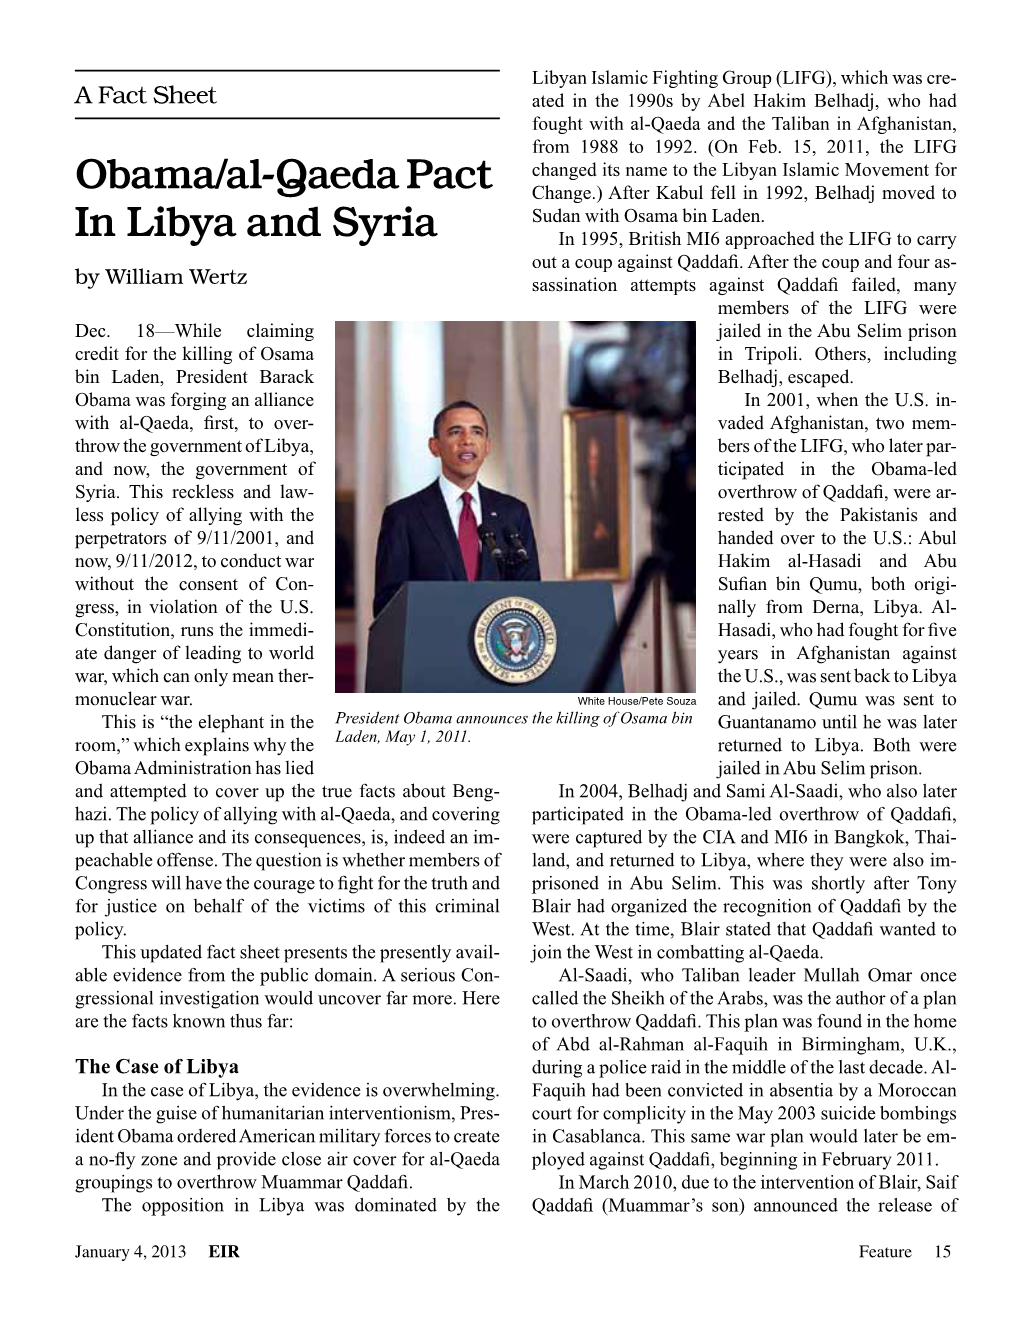 Obama/Al-Qaeda Pact in Libya and Syria